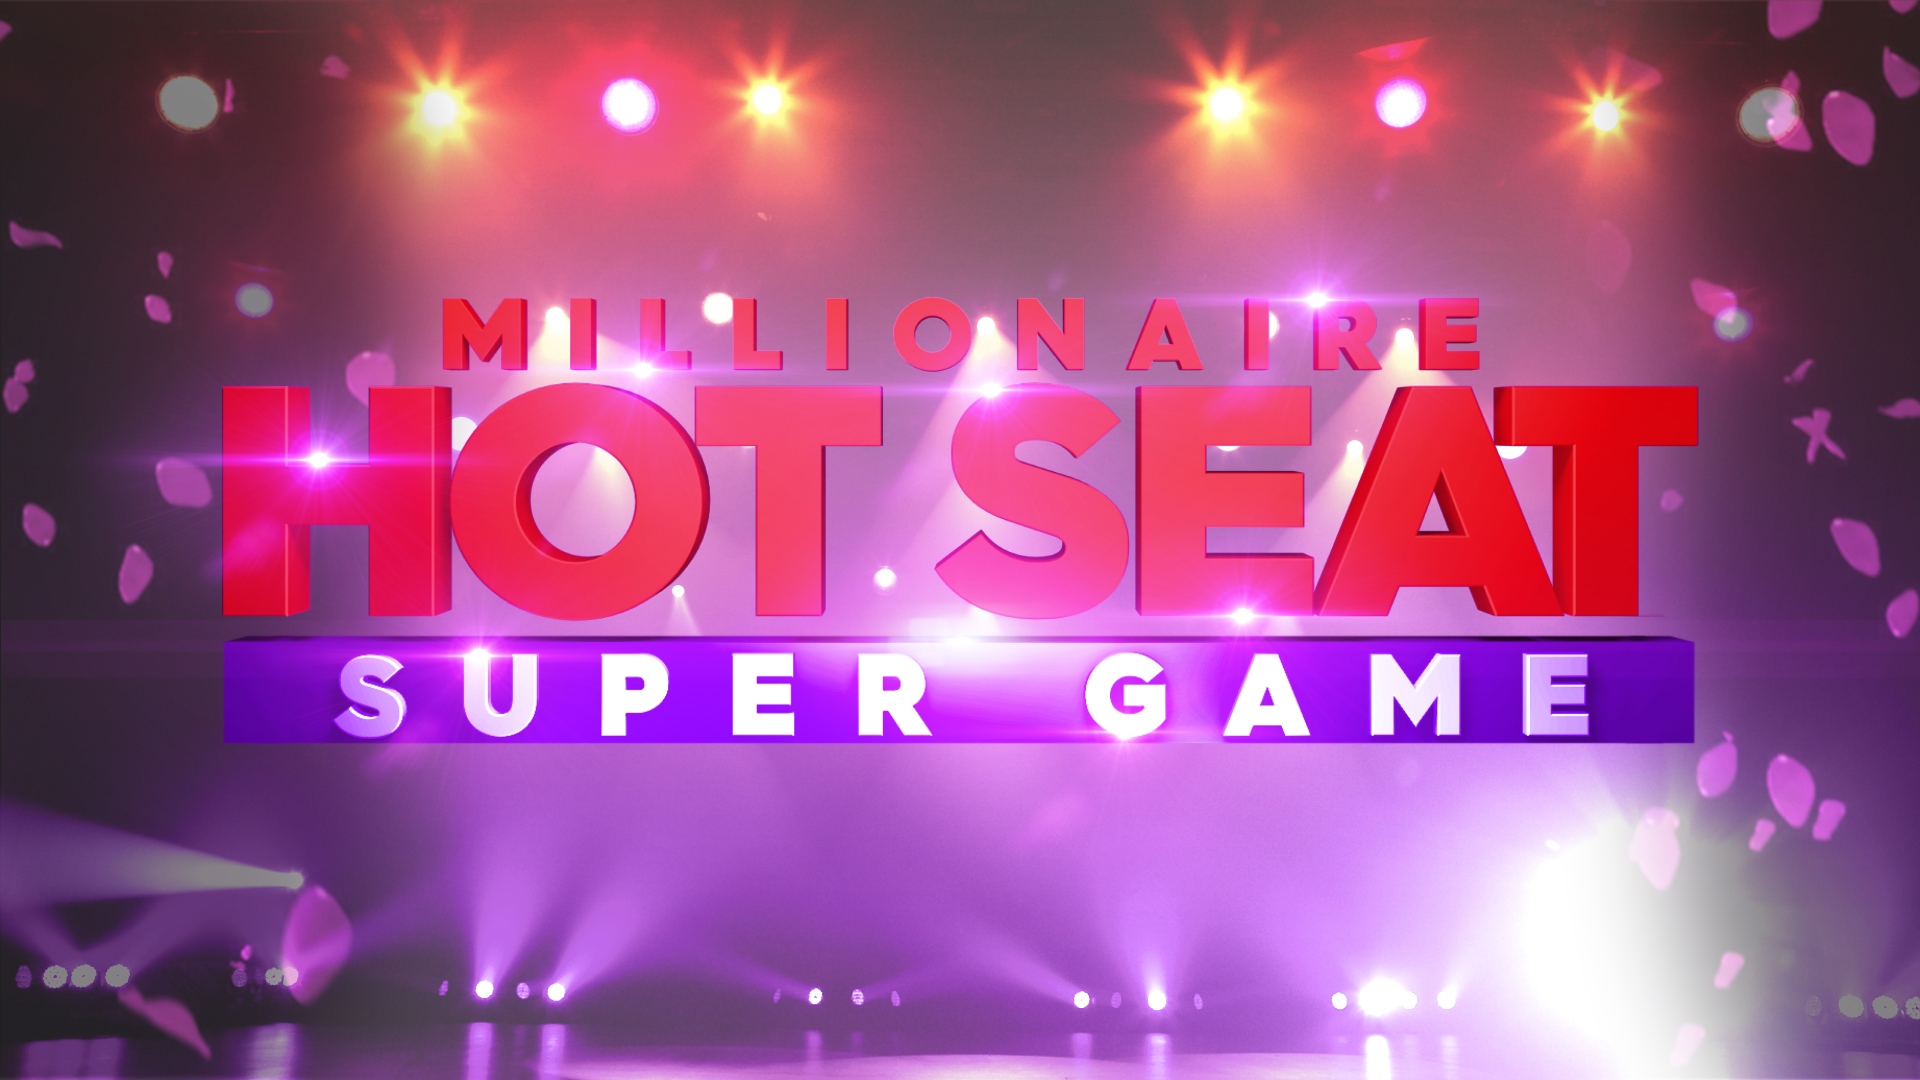 Millionaire Hot Seat Contestant Application